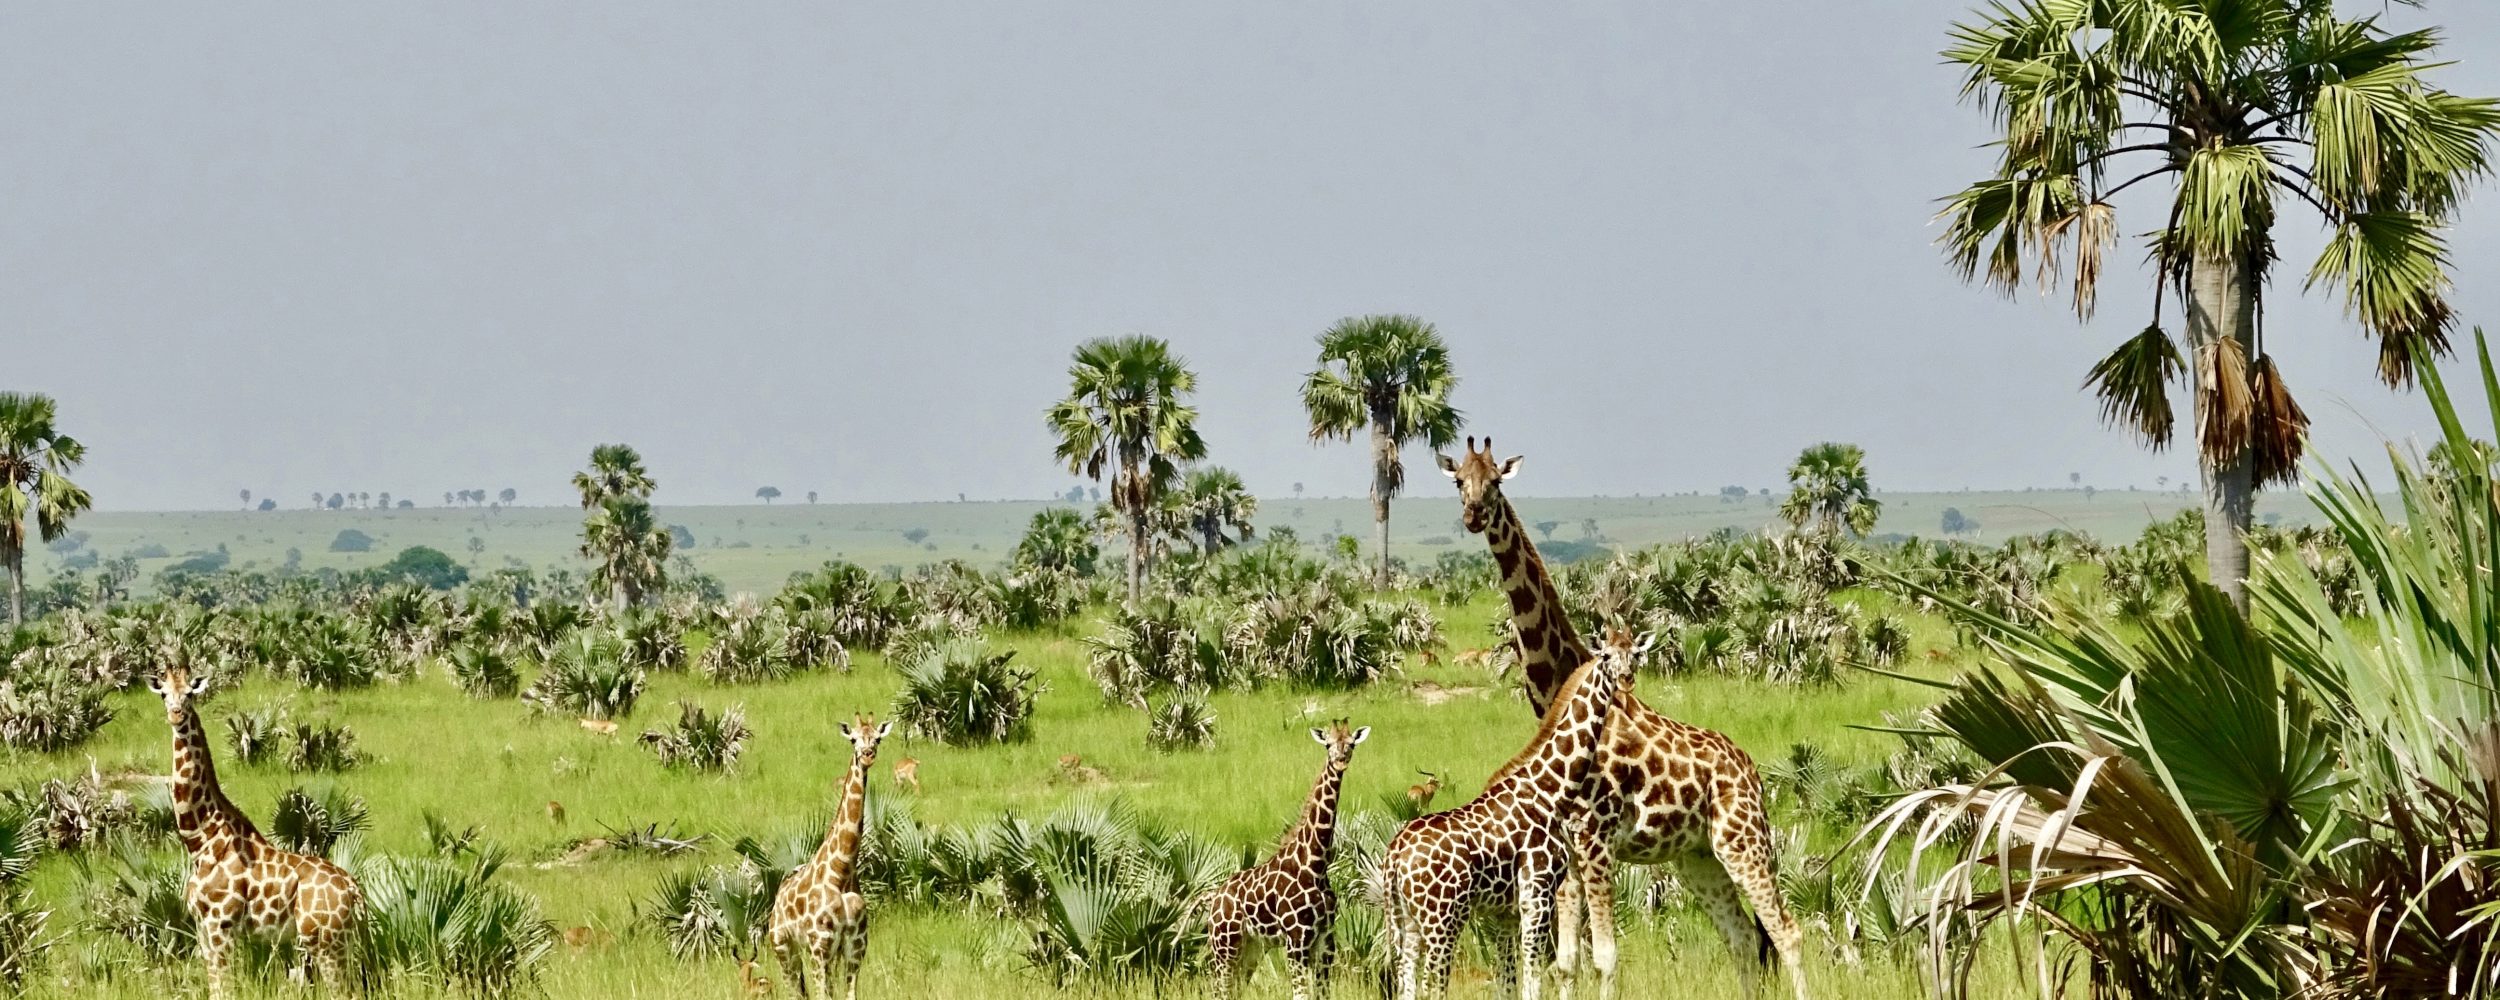 murchison national park uganda giraffe